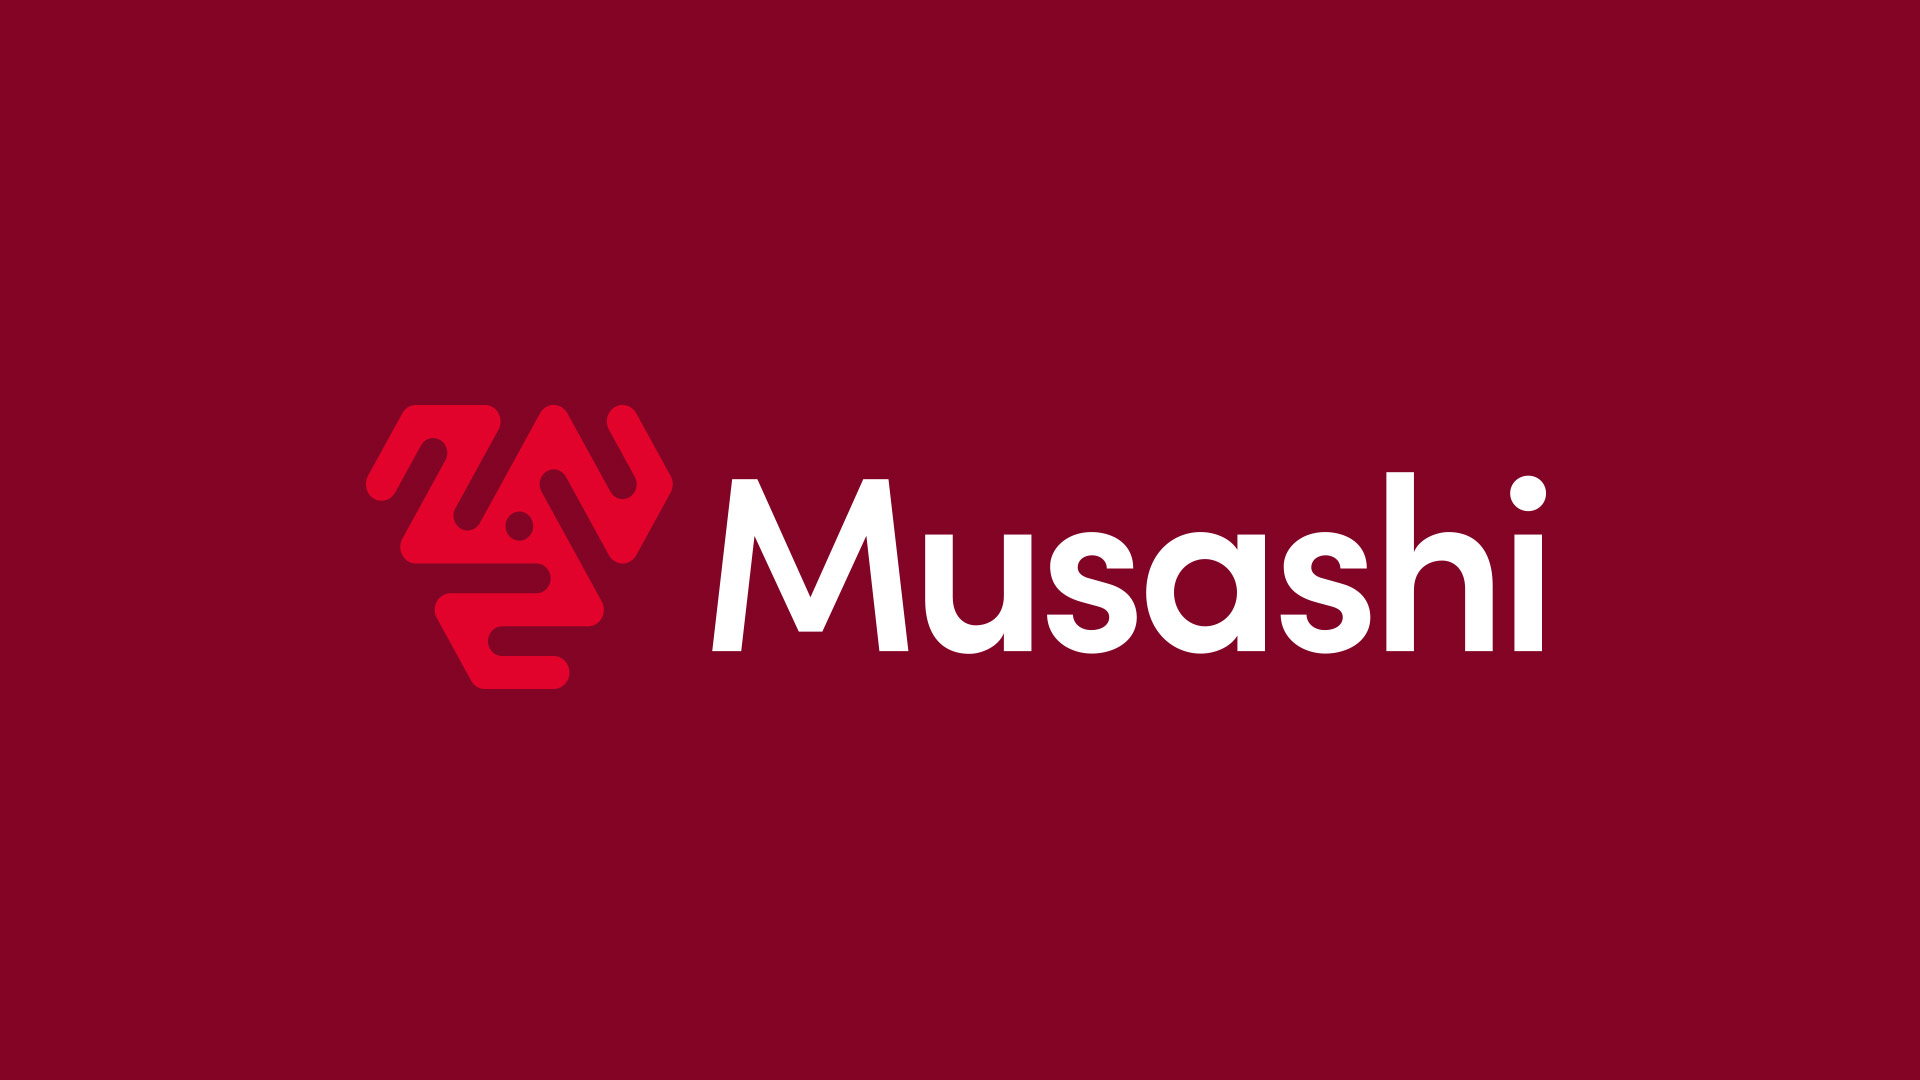 20201108_musasahi_02